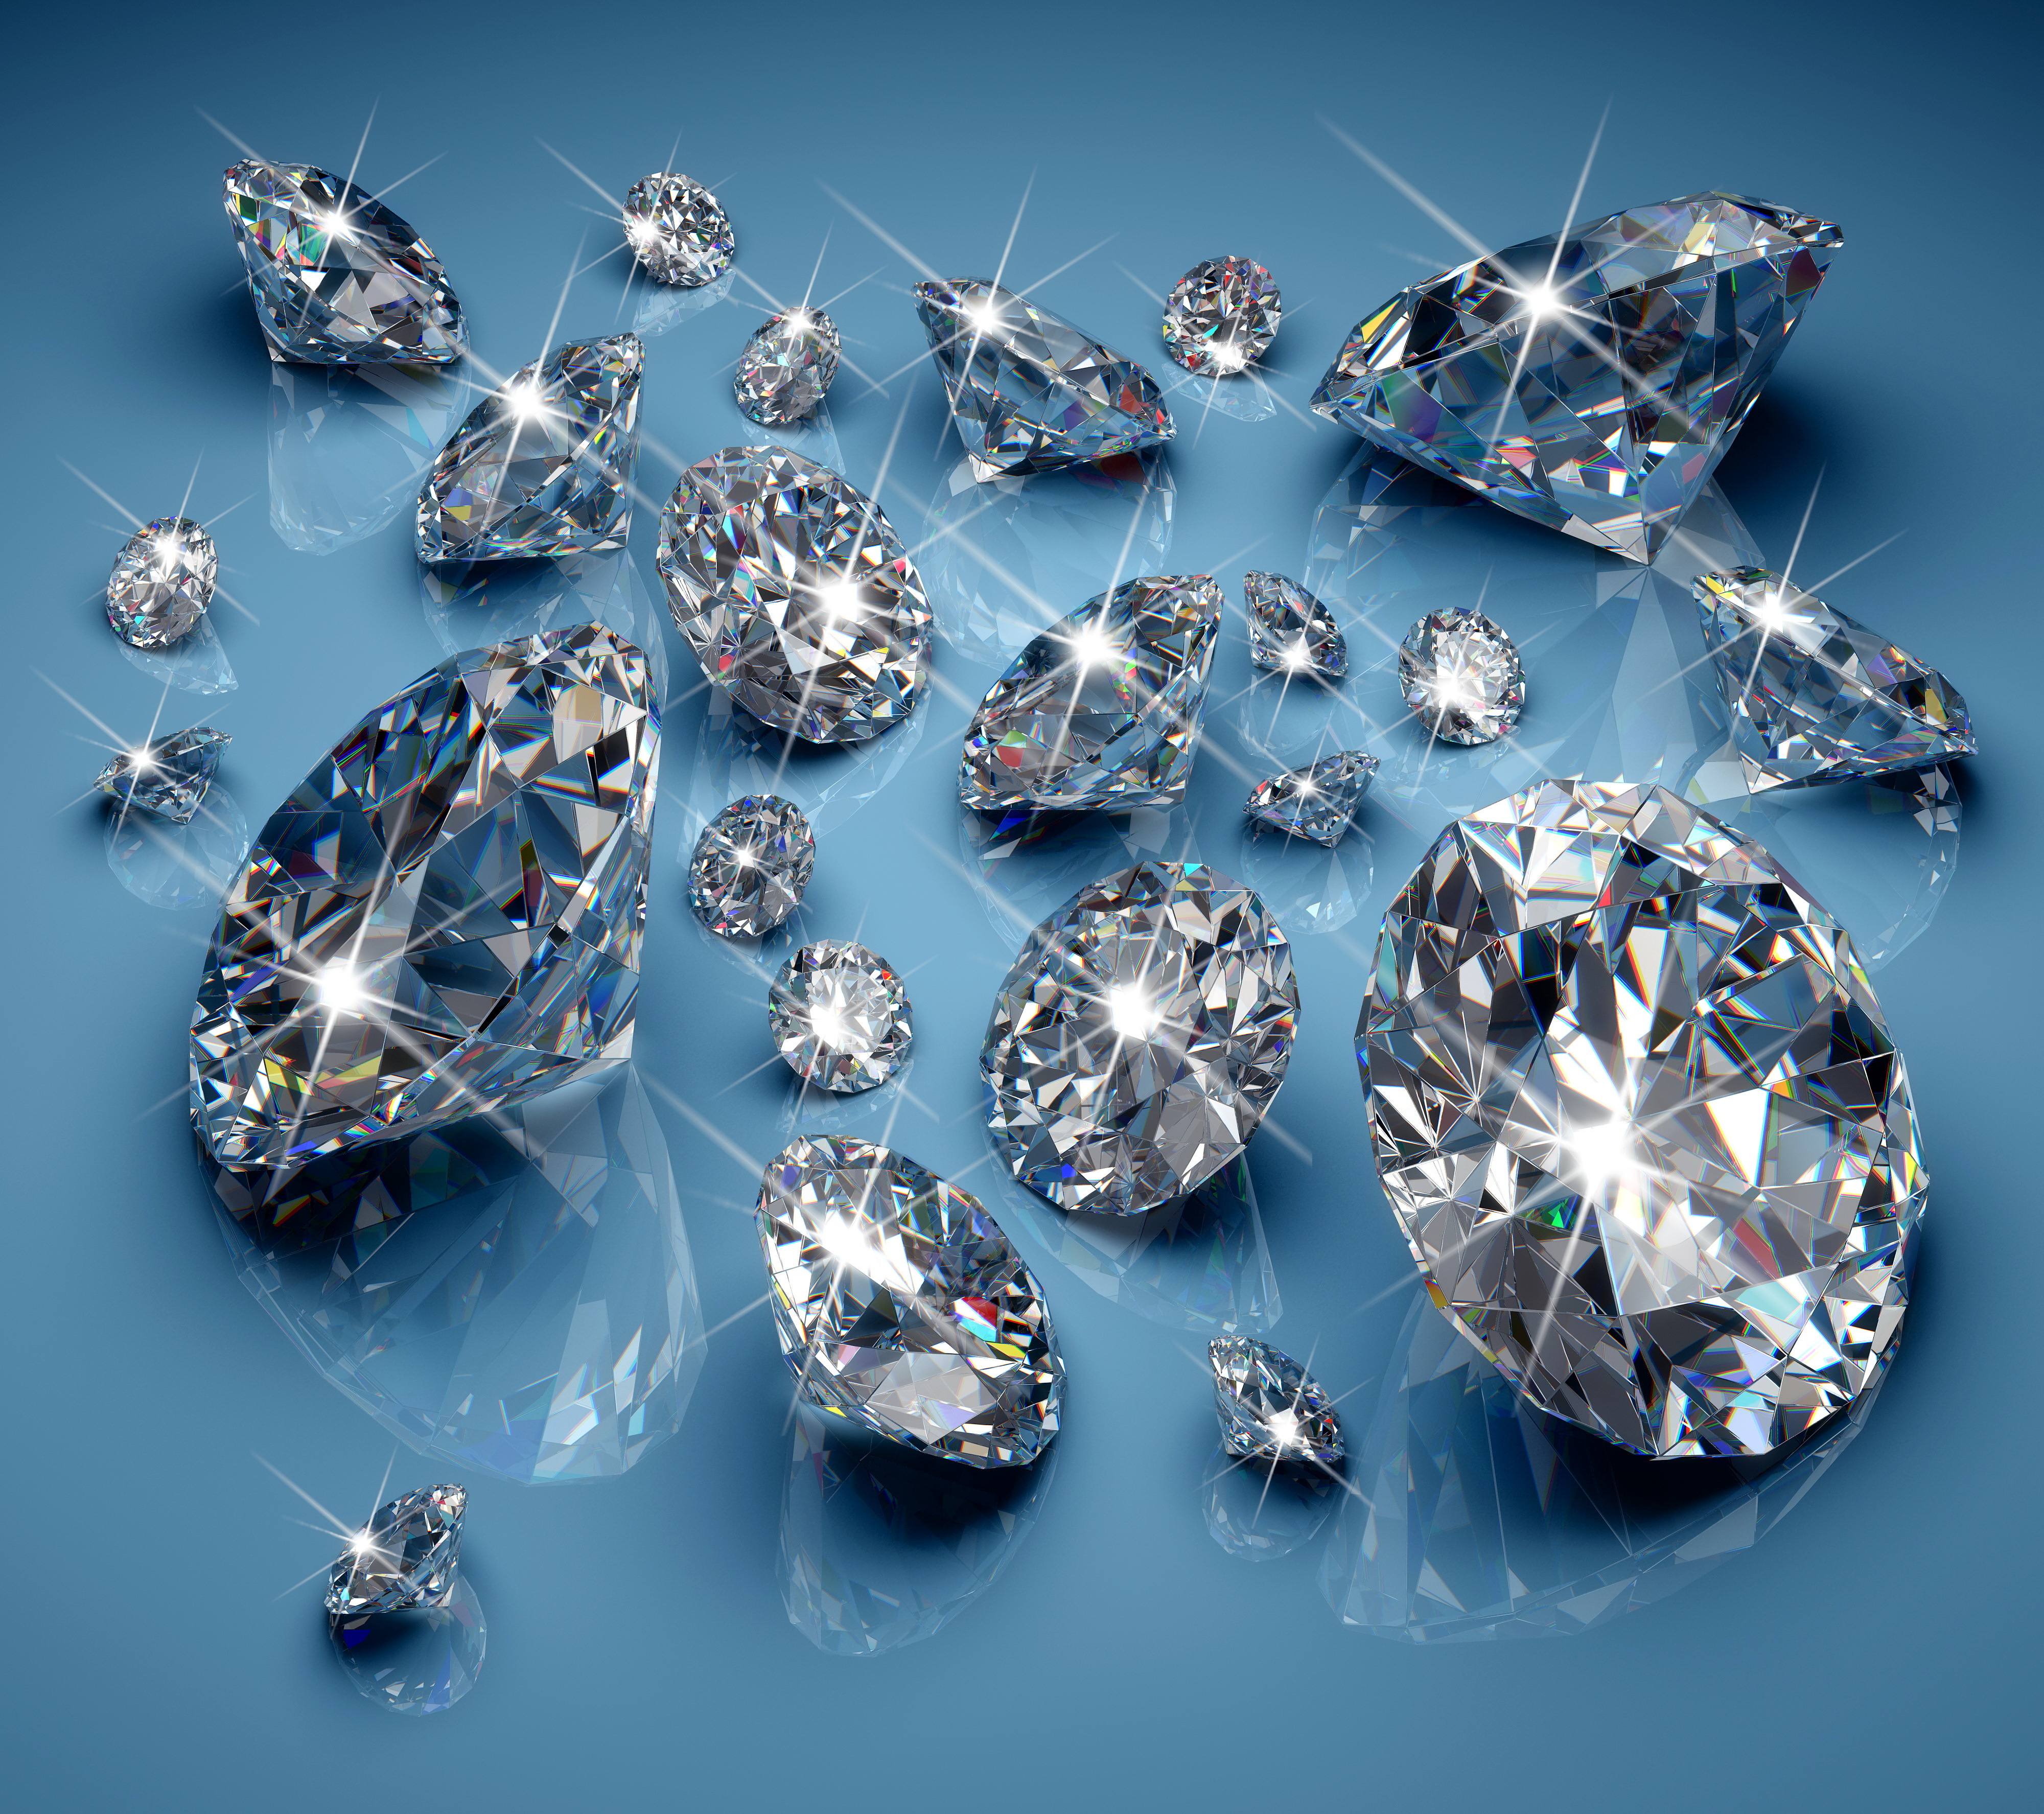  jem sparkle glow glitter diamonds wallpapers photos pictures